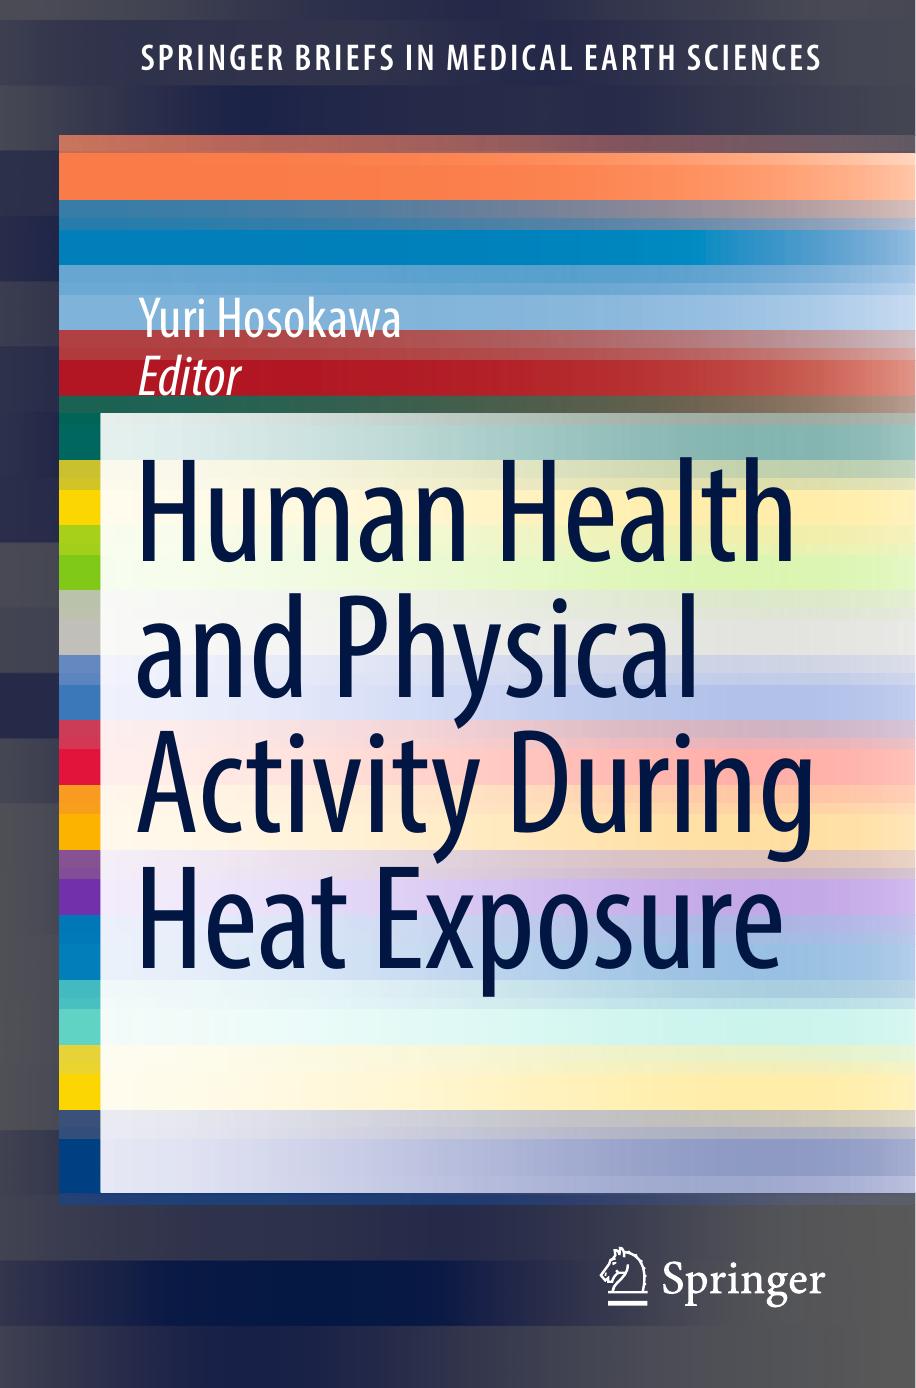 Human Health and Physical Activity During Heat Exposure by Yuri Hosokawa